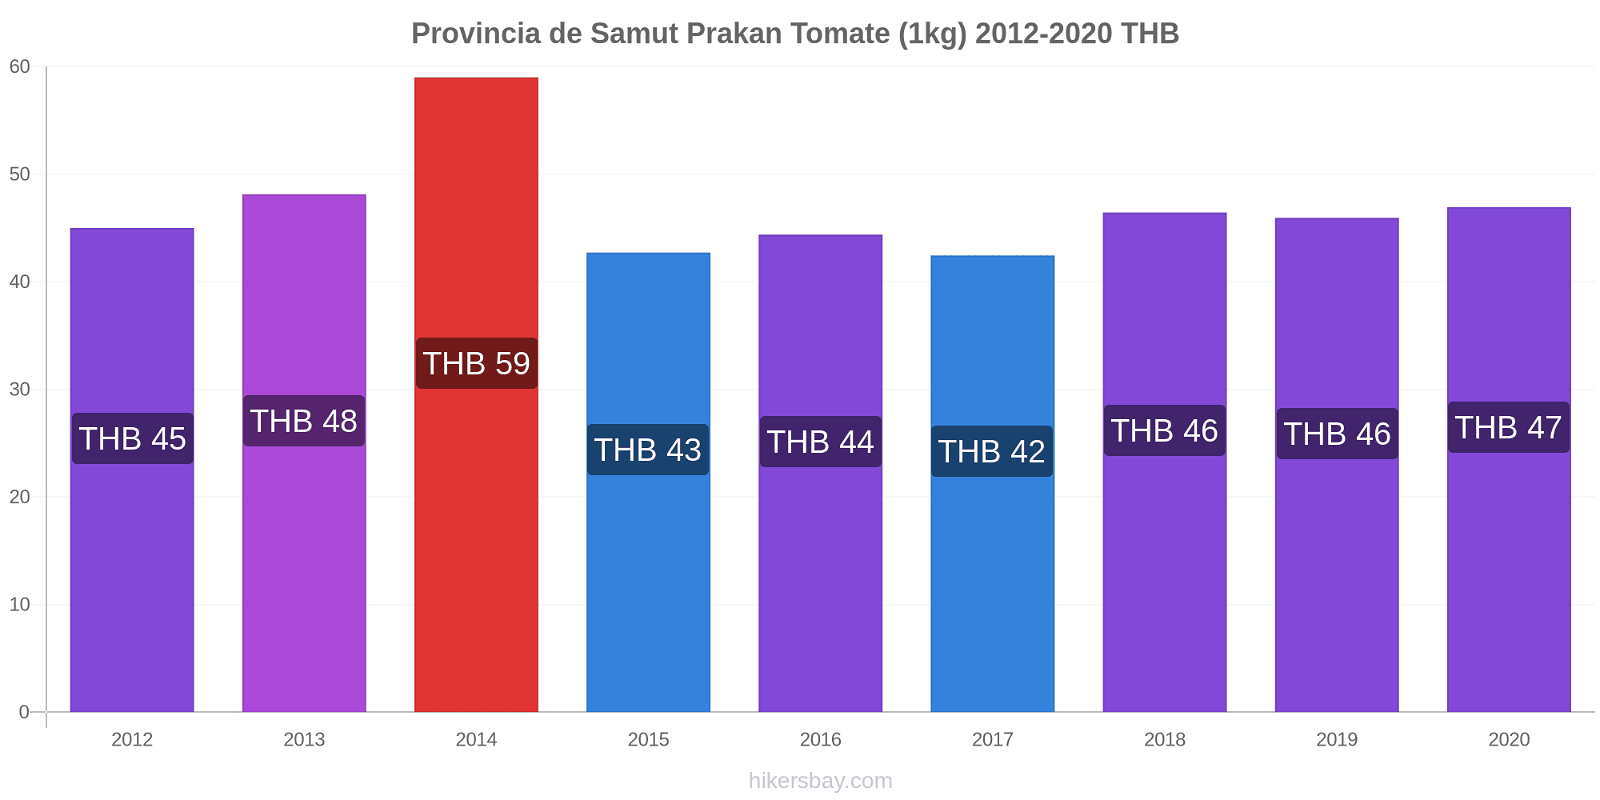 Provincia de Samut Prakan cambios de precios Tomate (1kg) hikersbay.com